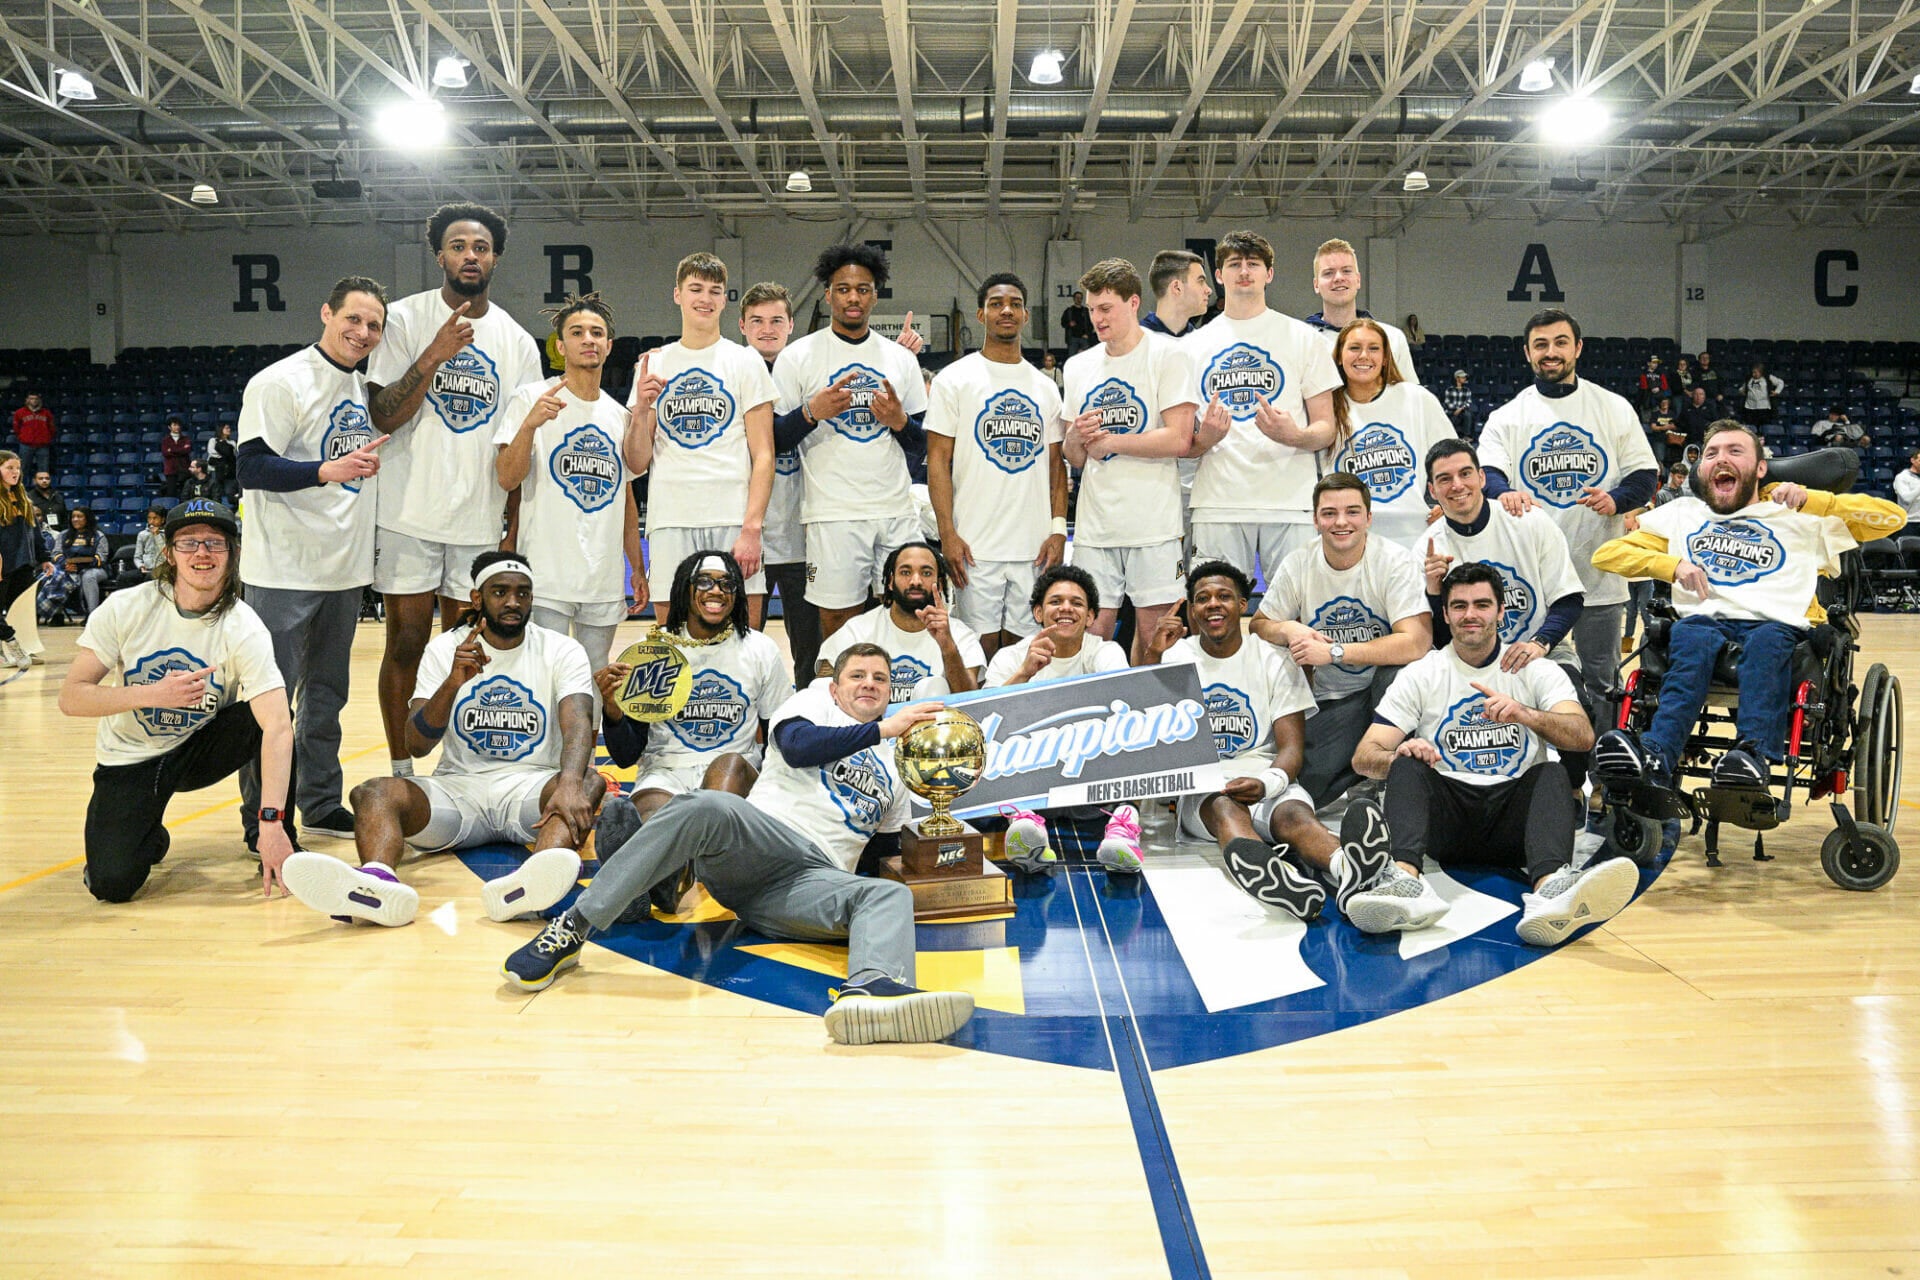 Group photo of the Merrimack College Men’s Basketball team.